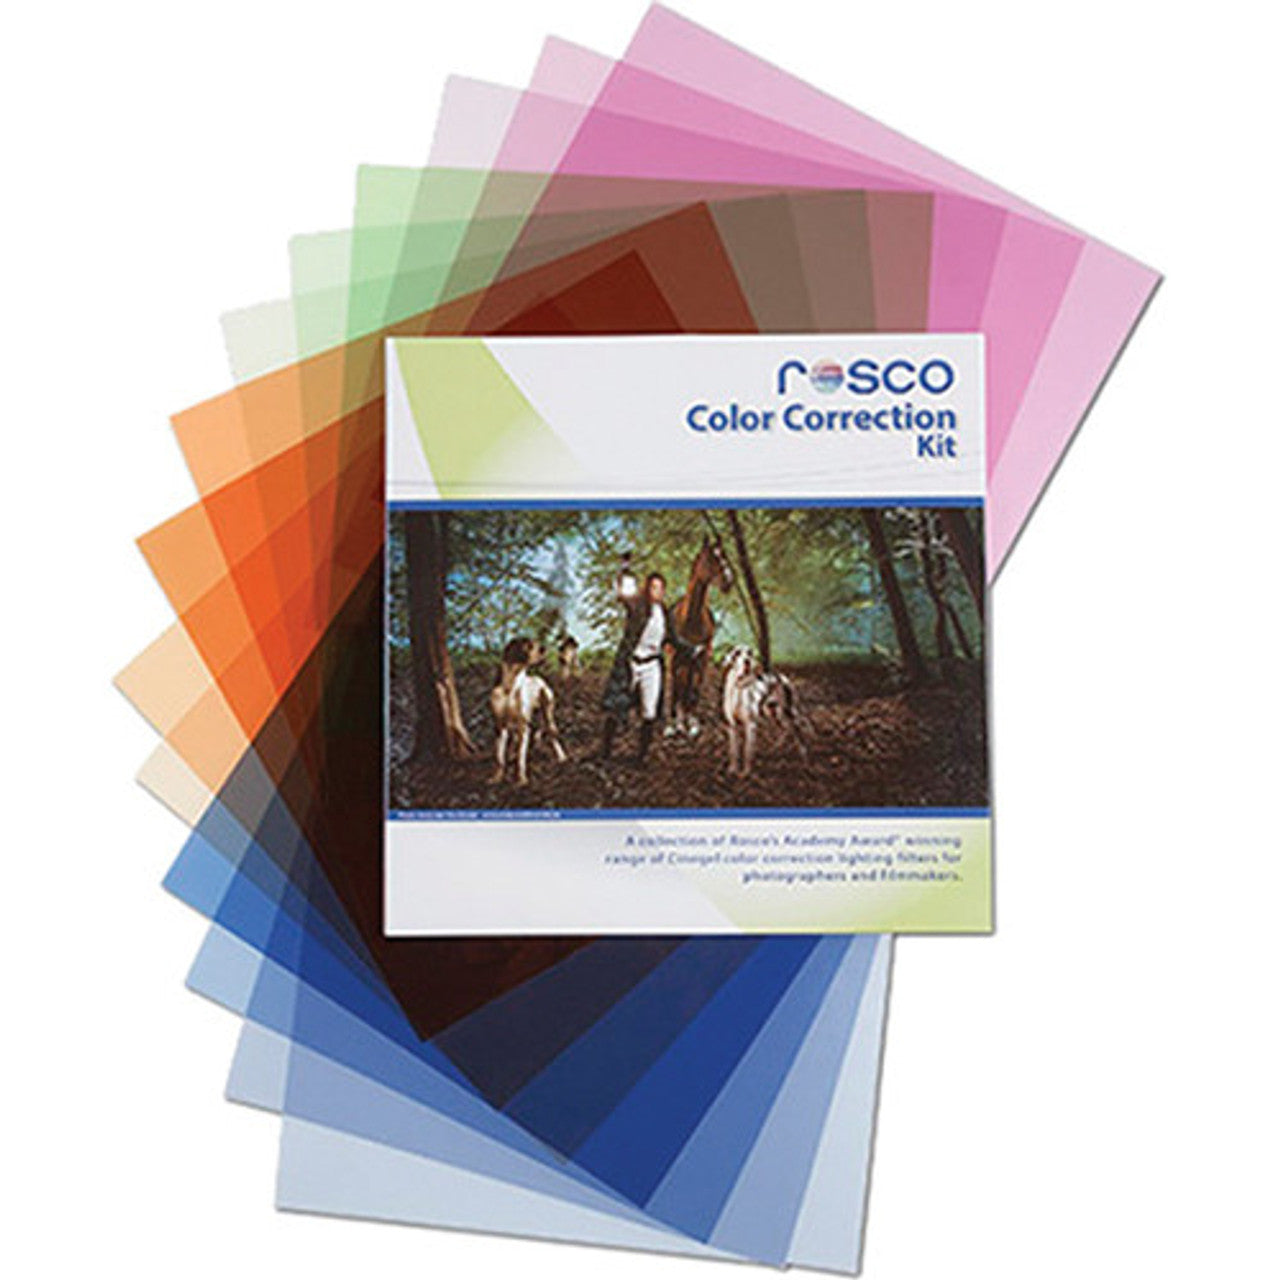 Rosco Color Correction Filter Kit (12 x 12")  閃光燈校正色片 Gel紙套装